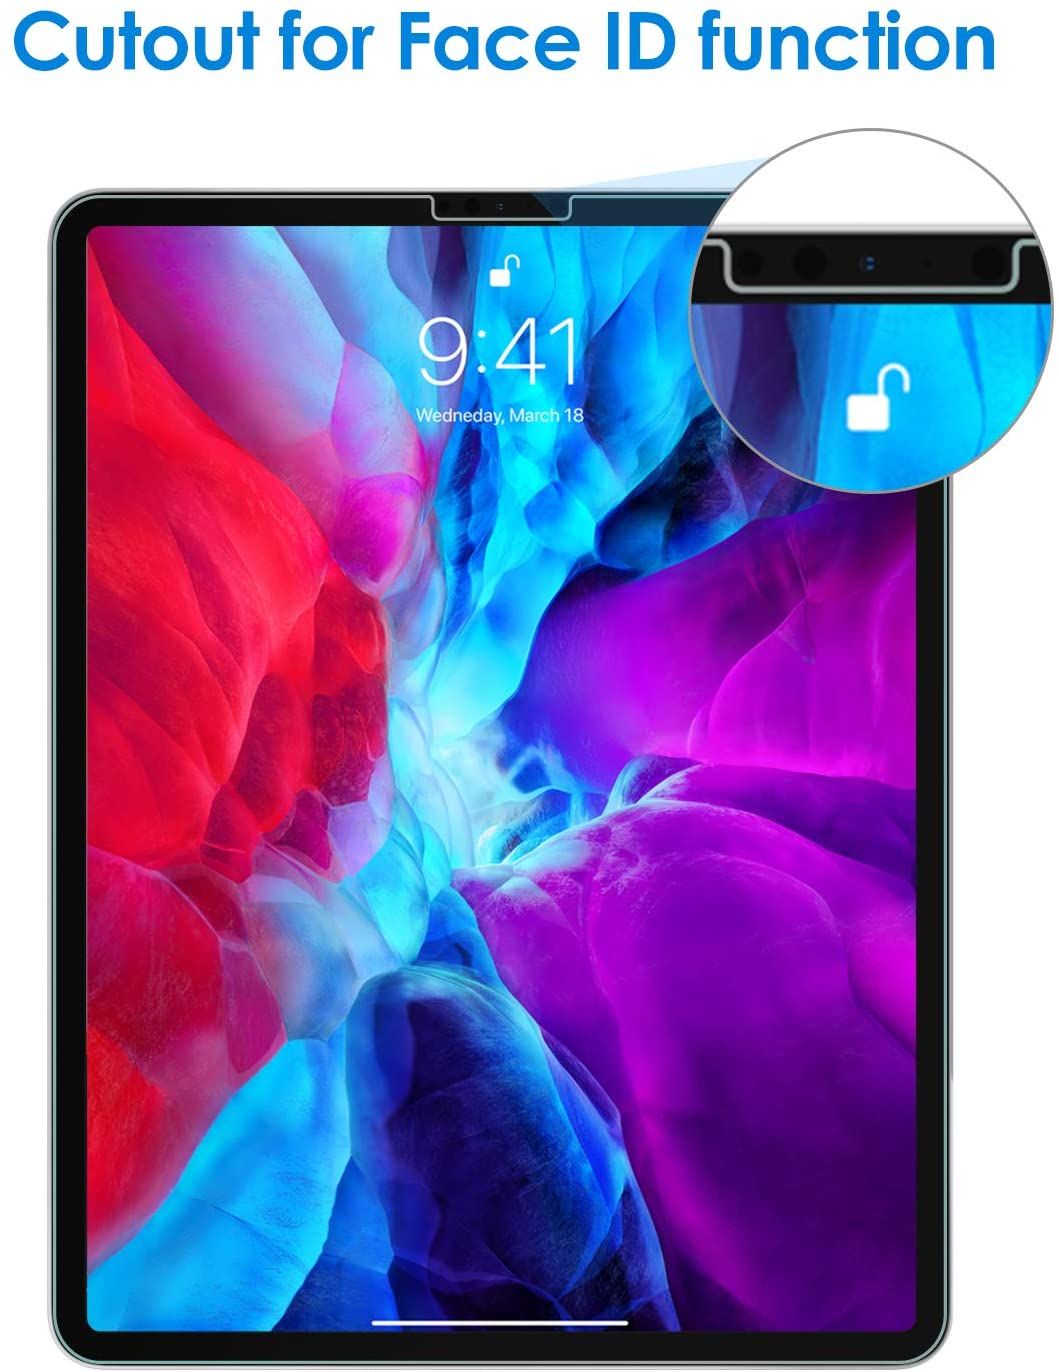 JETech iPad Pro Screen Protector front-facing cutout